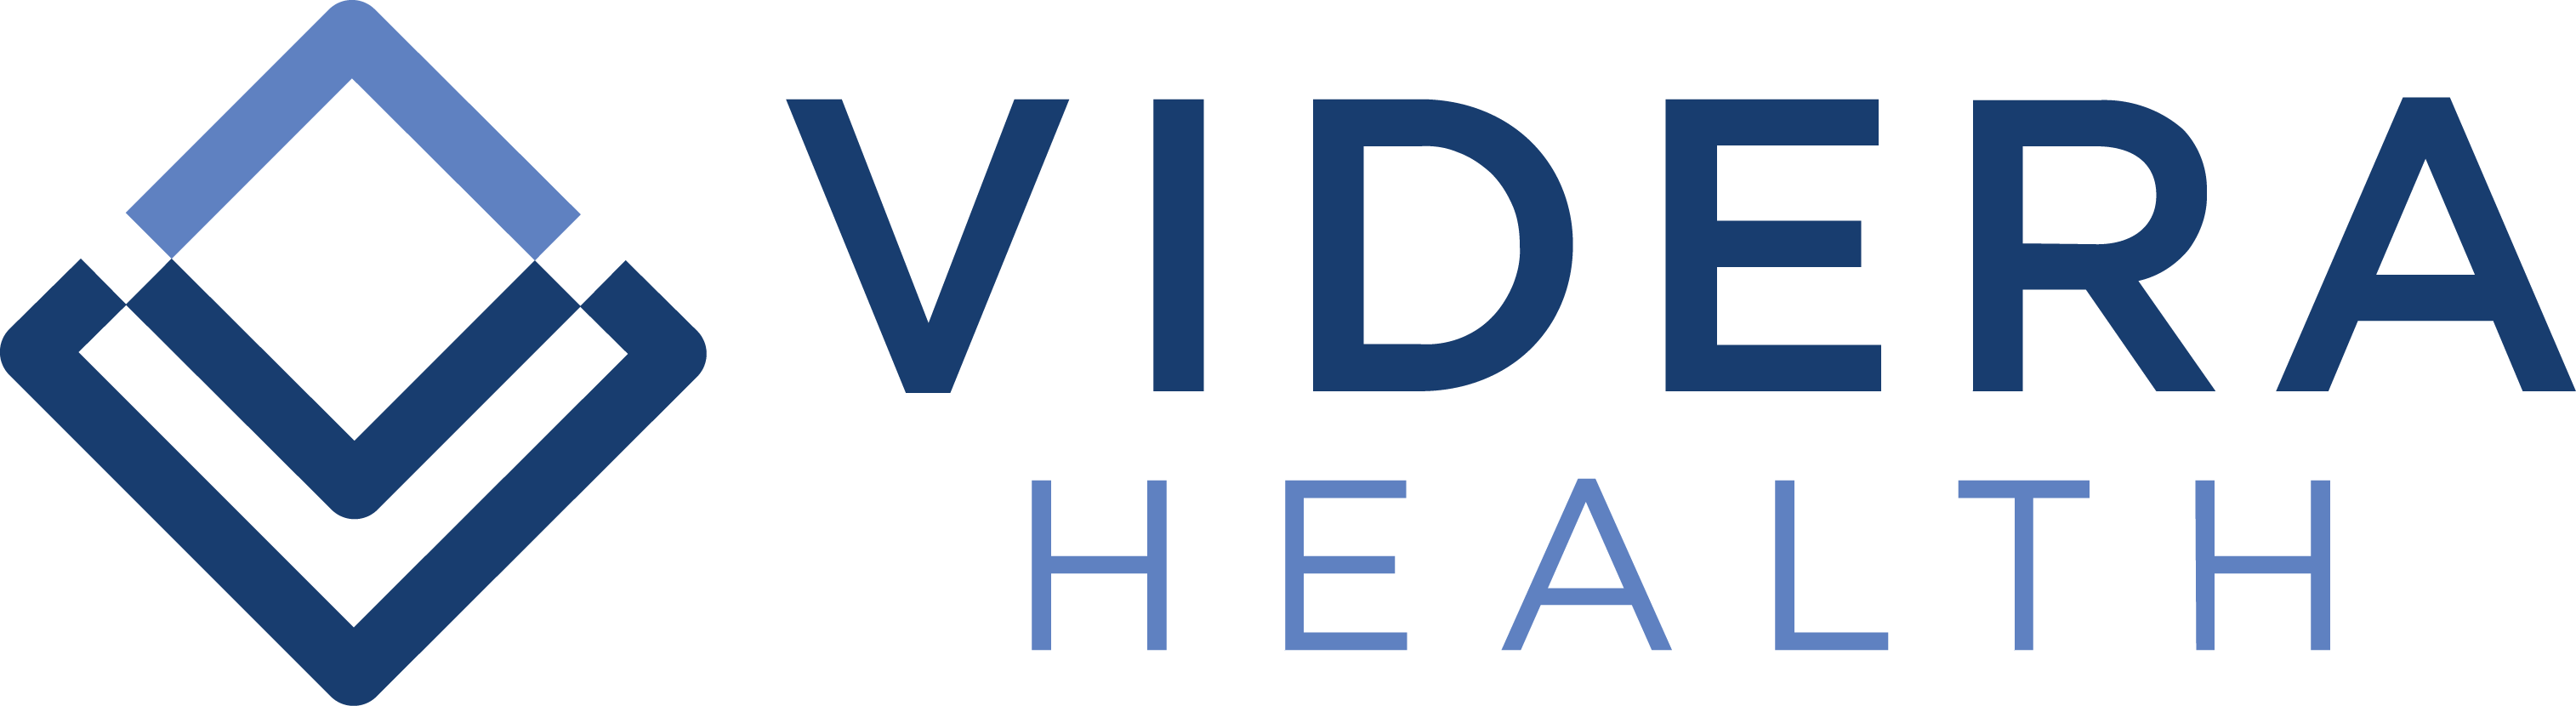 Videra Health Secure